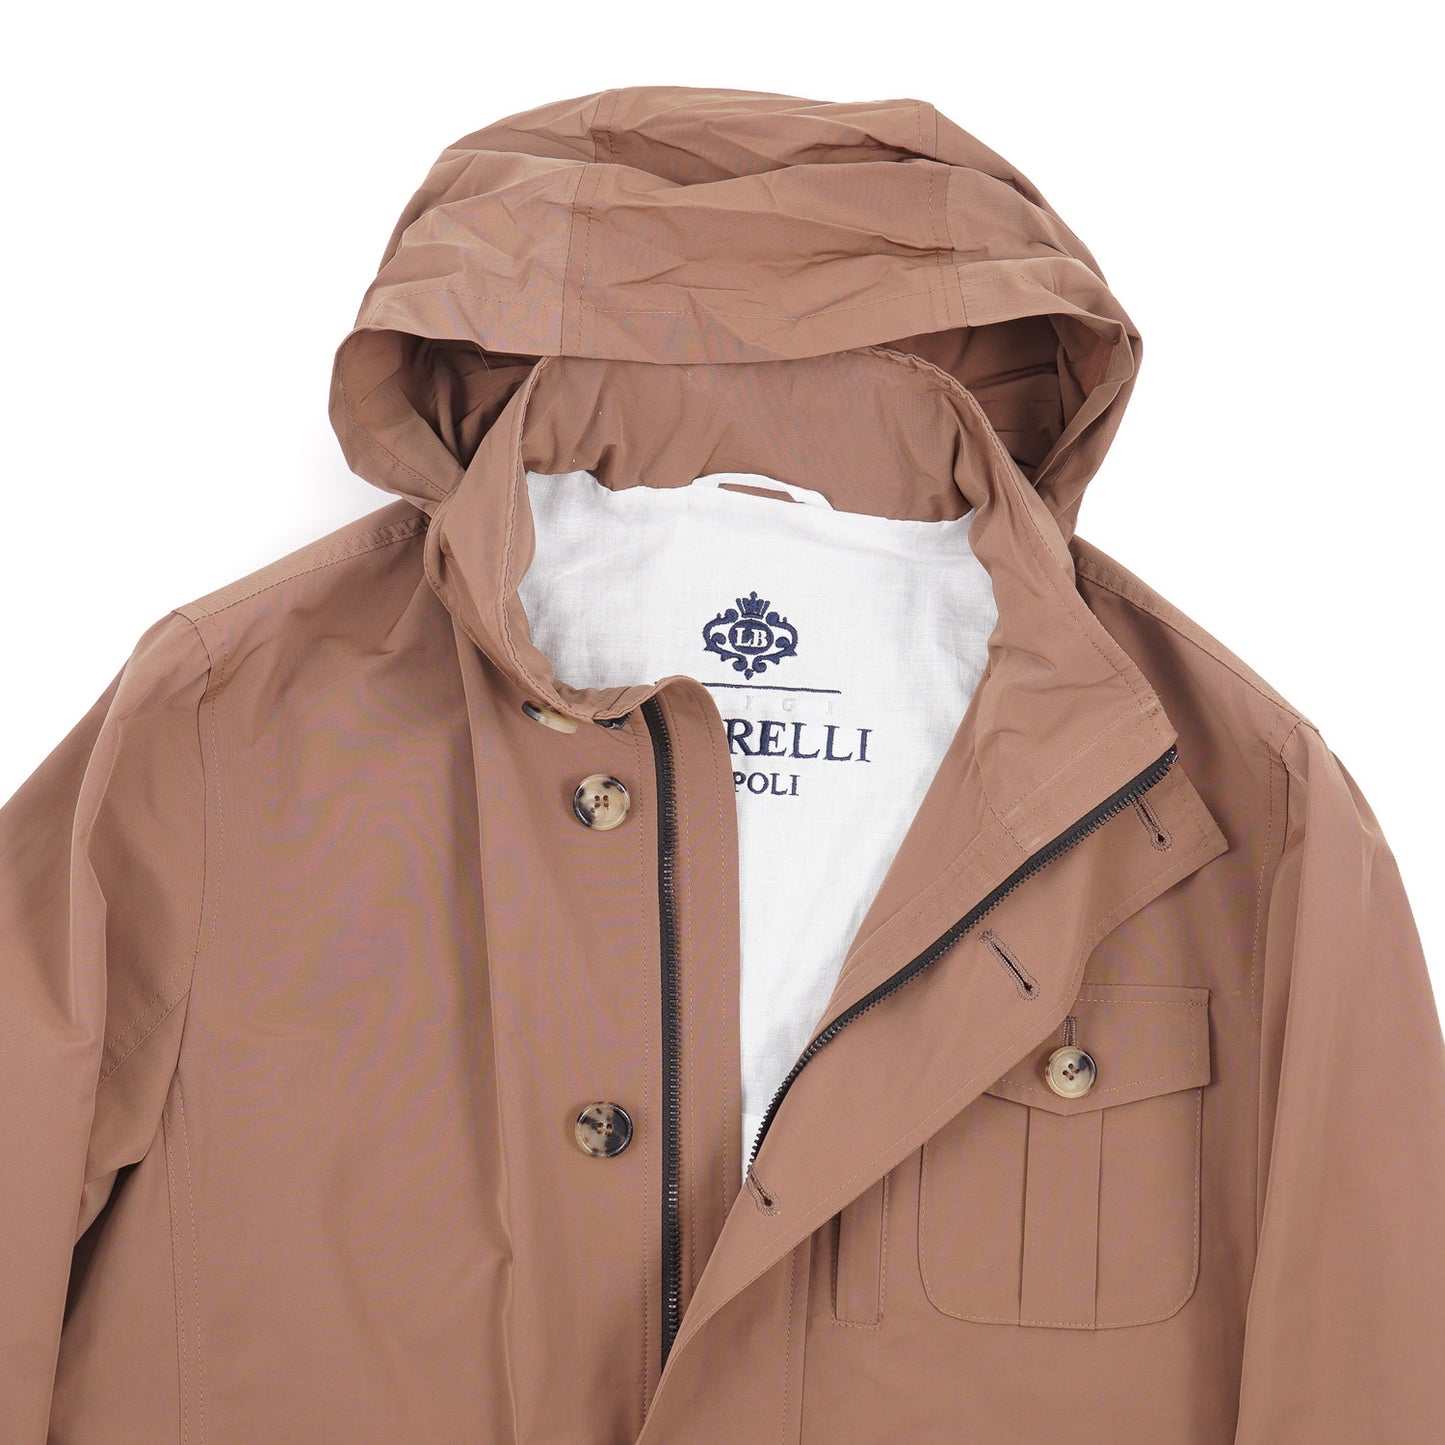 Borrelli Weather-Repellent Field Jacket - Top Shelf Apparel